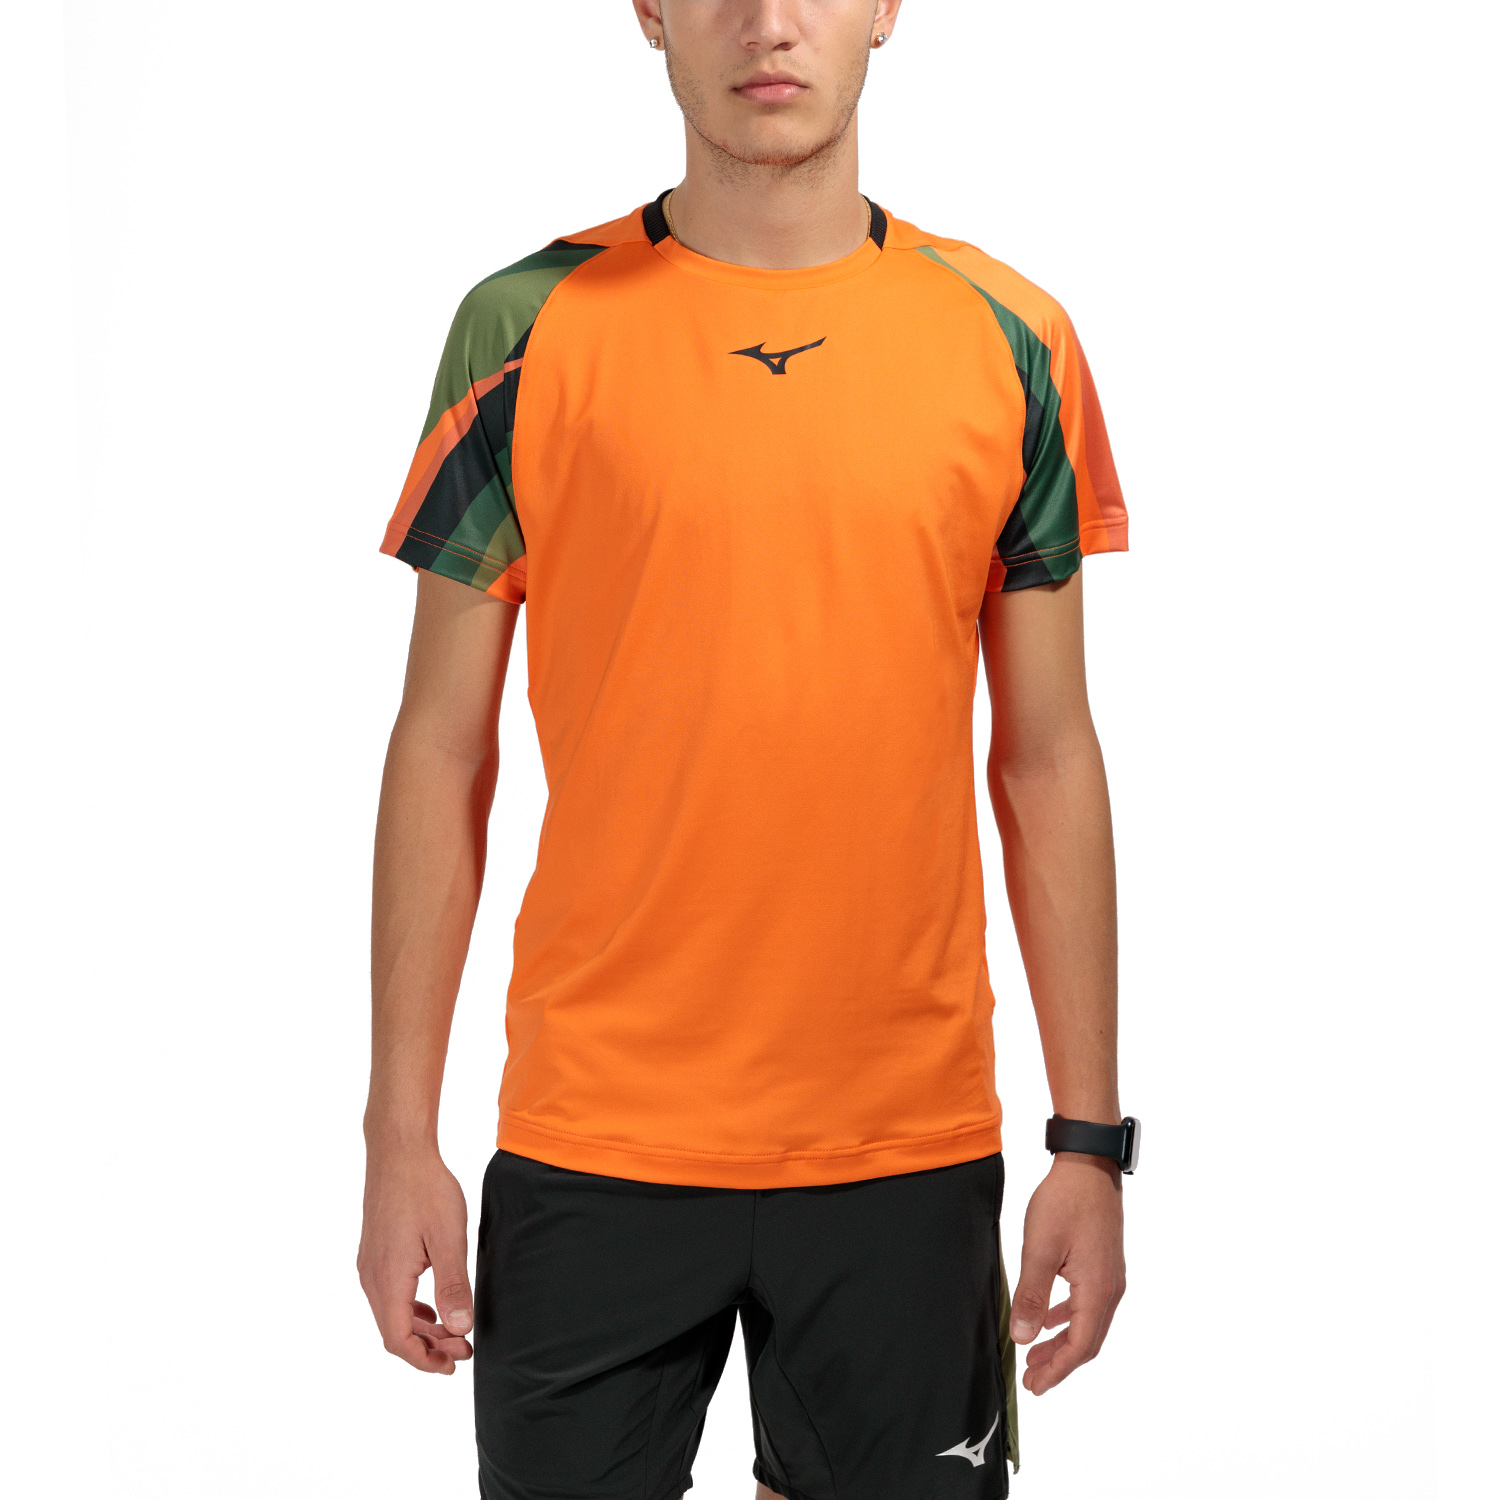 Mizuno Release Shadow T-Shirt - Vibrant Orange